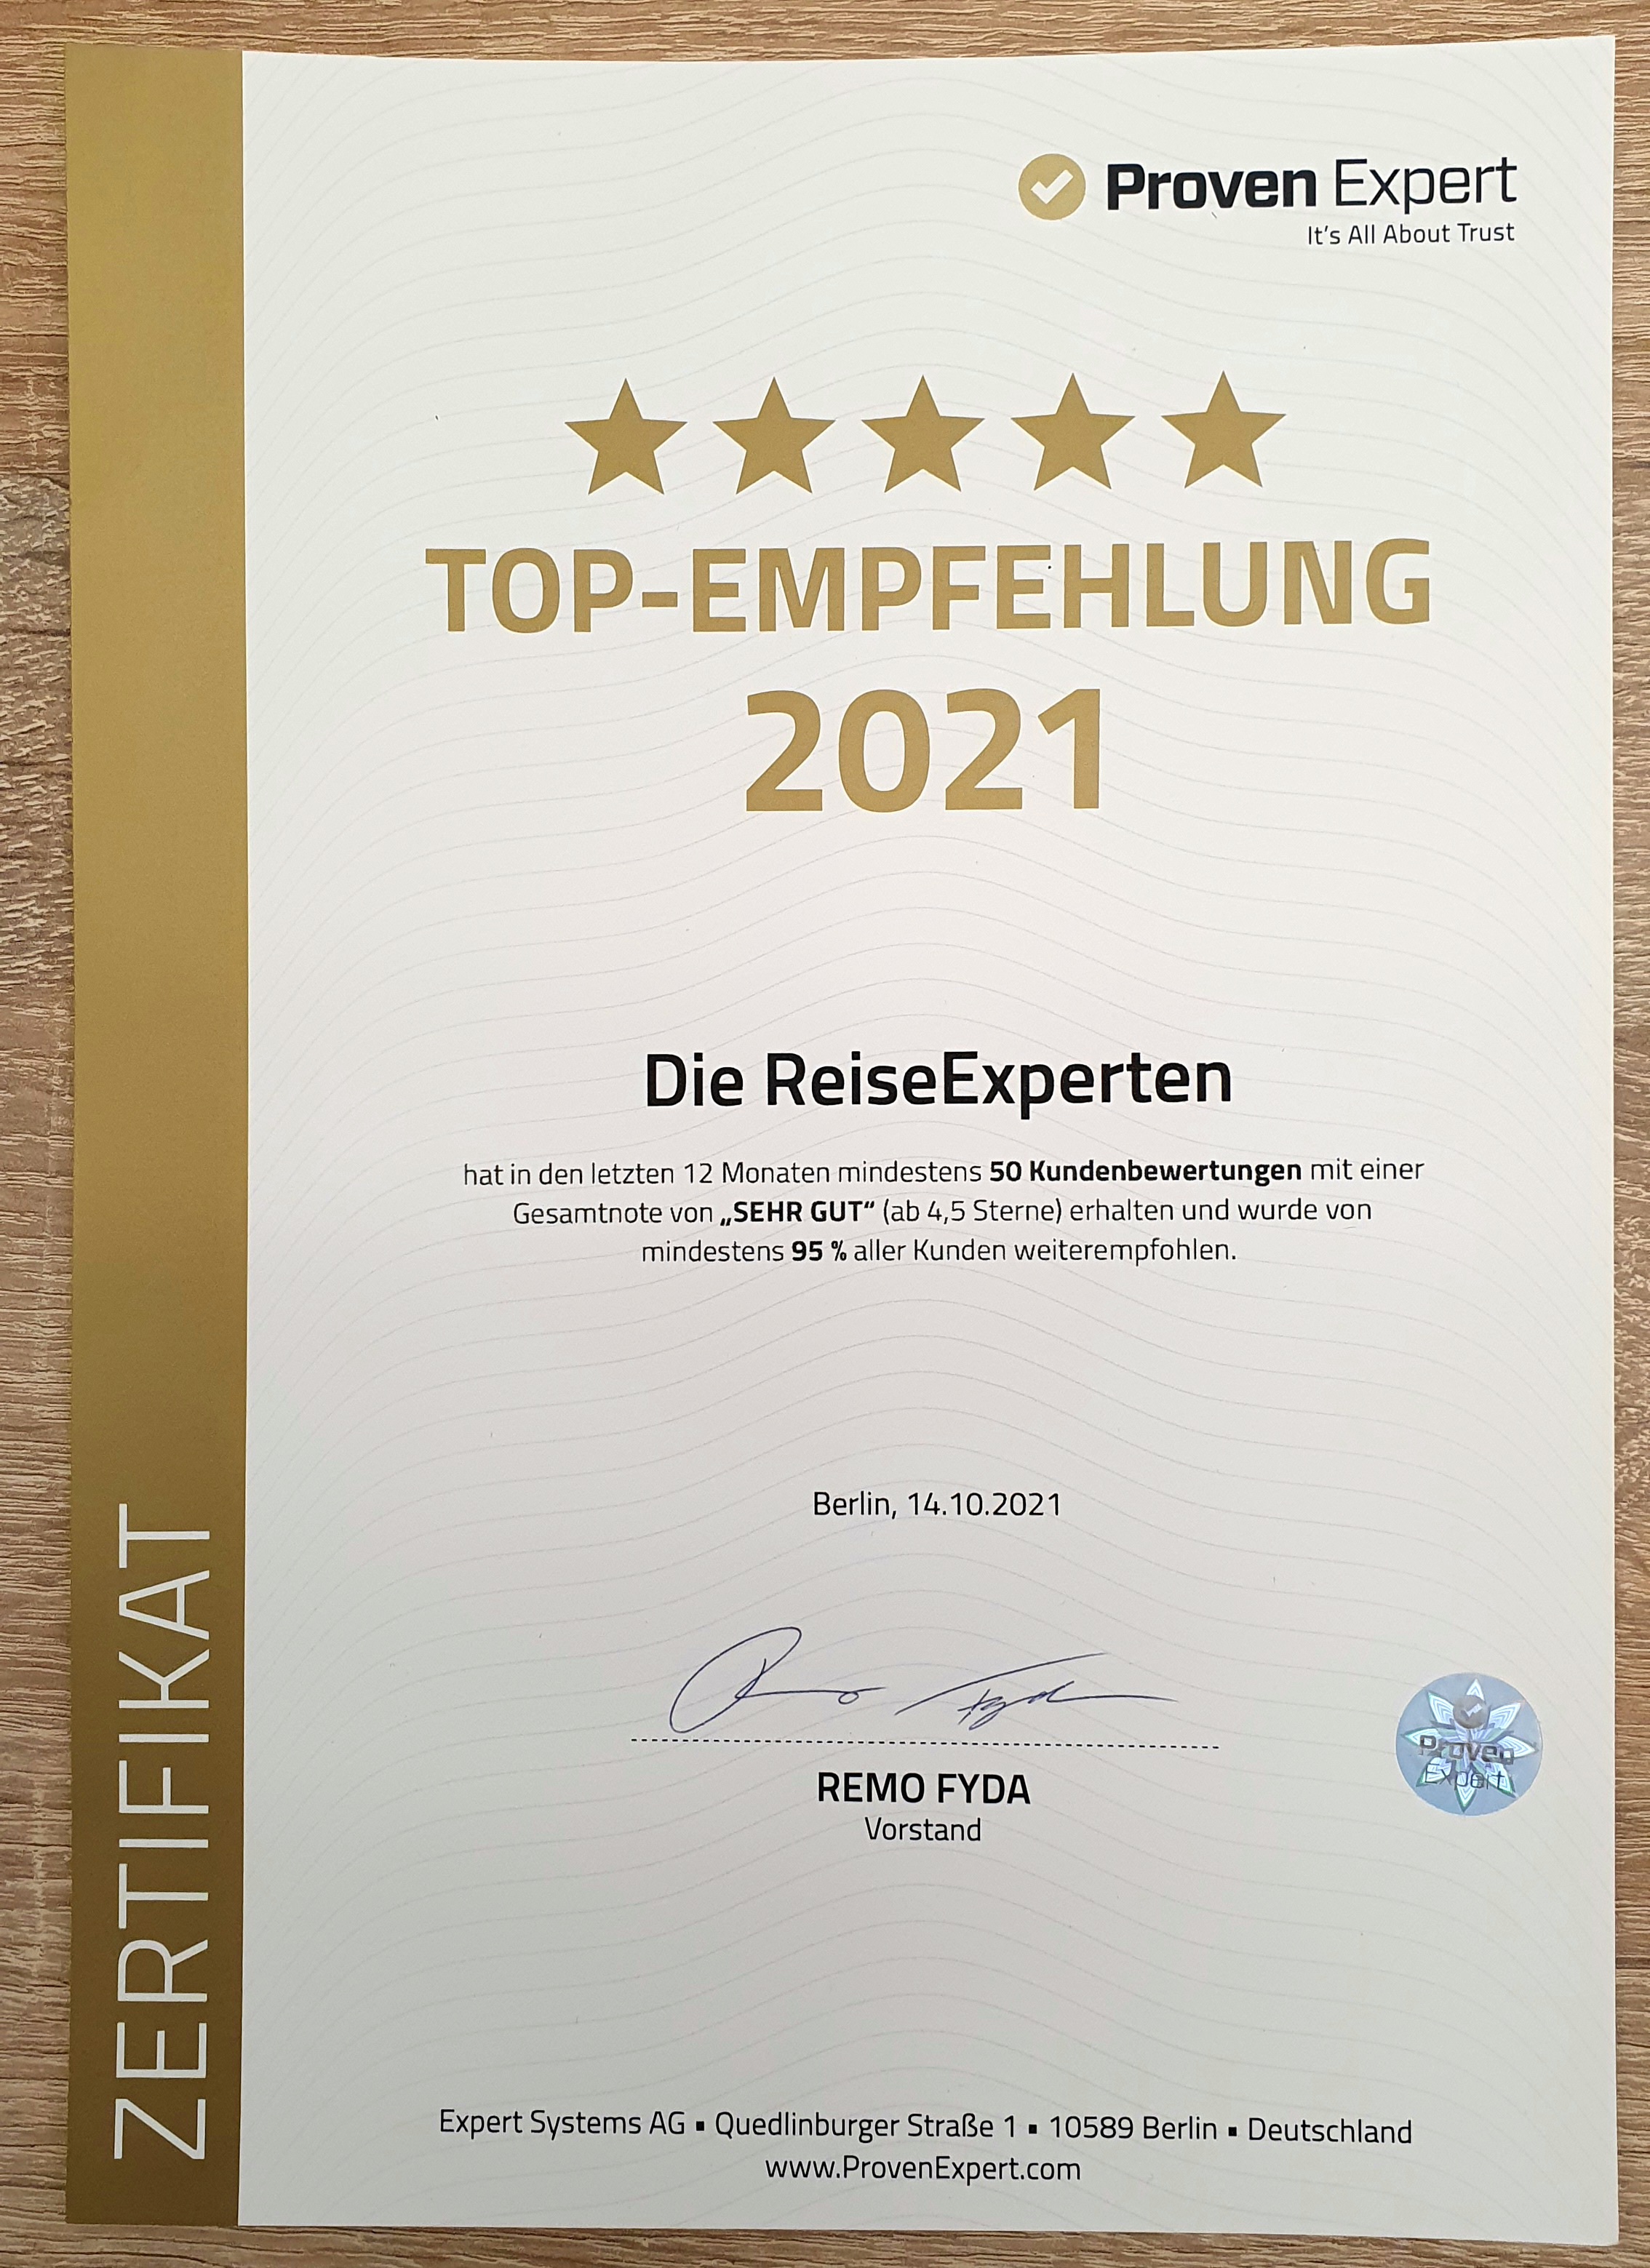 Proven Expert TOP-EMPFEHLUNG 2021